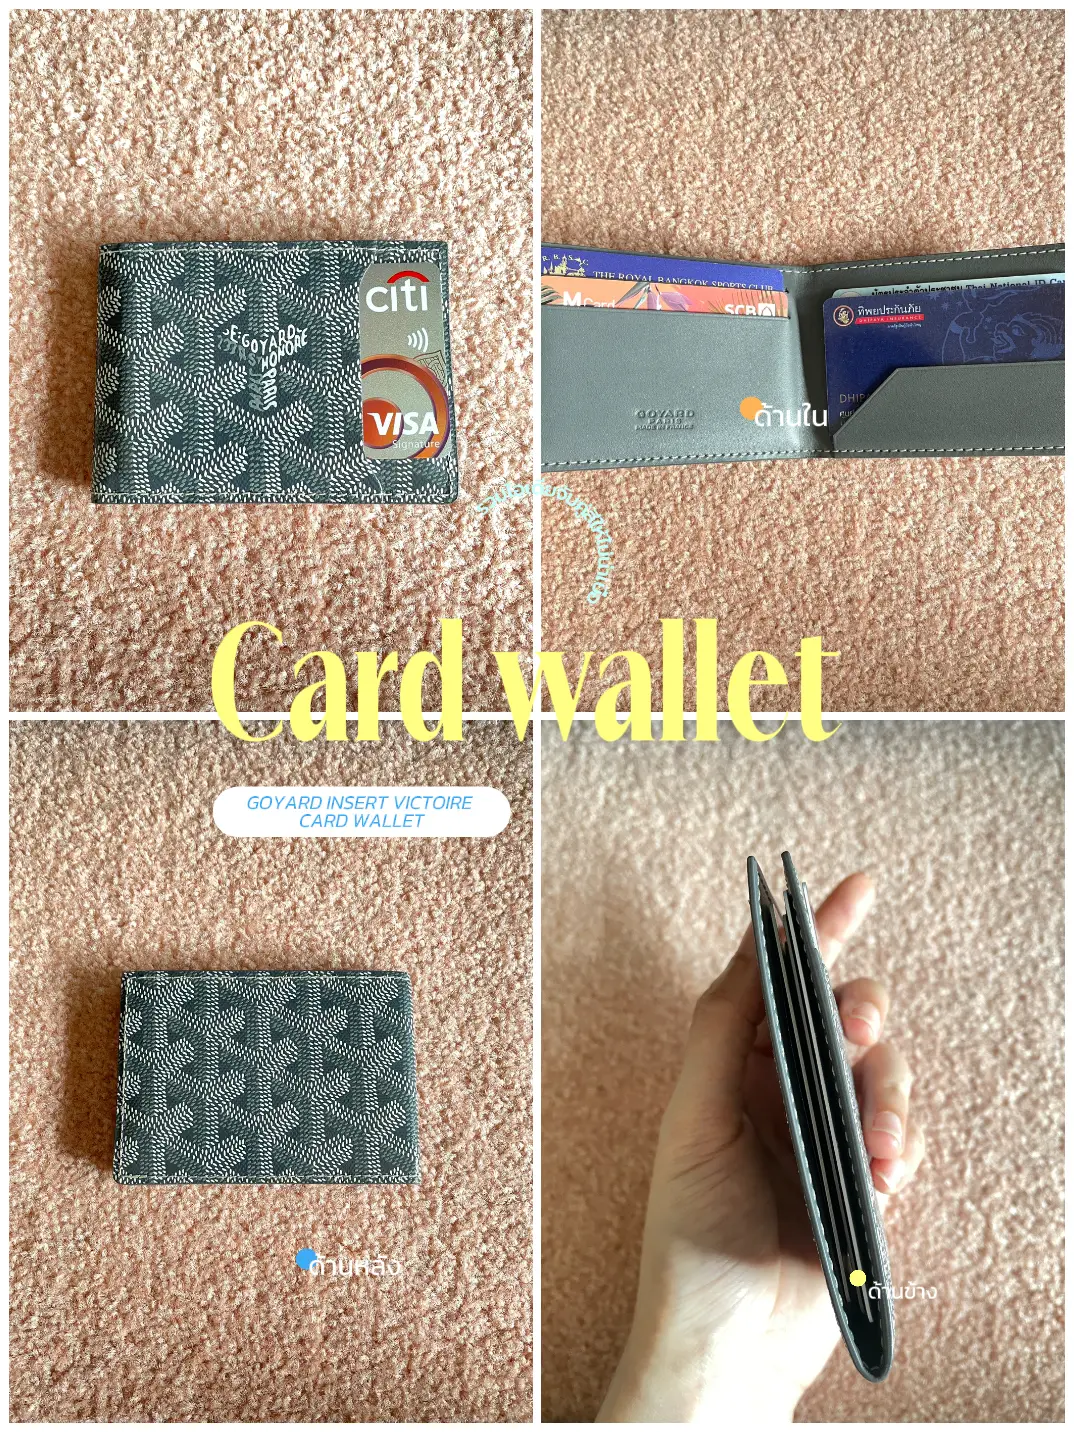 Goyard Insert Vicoire Card Wallet